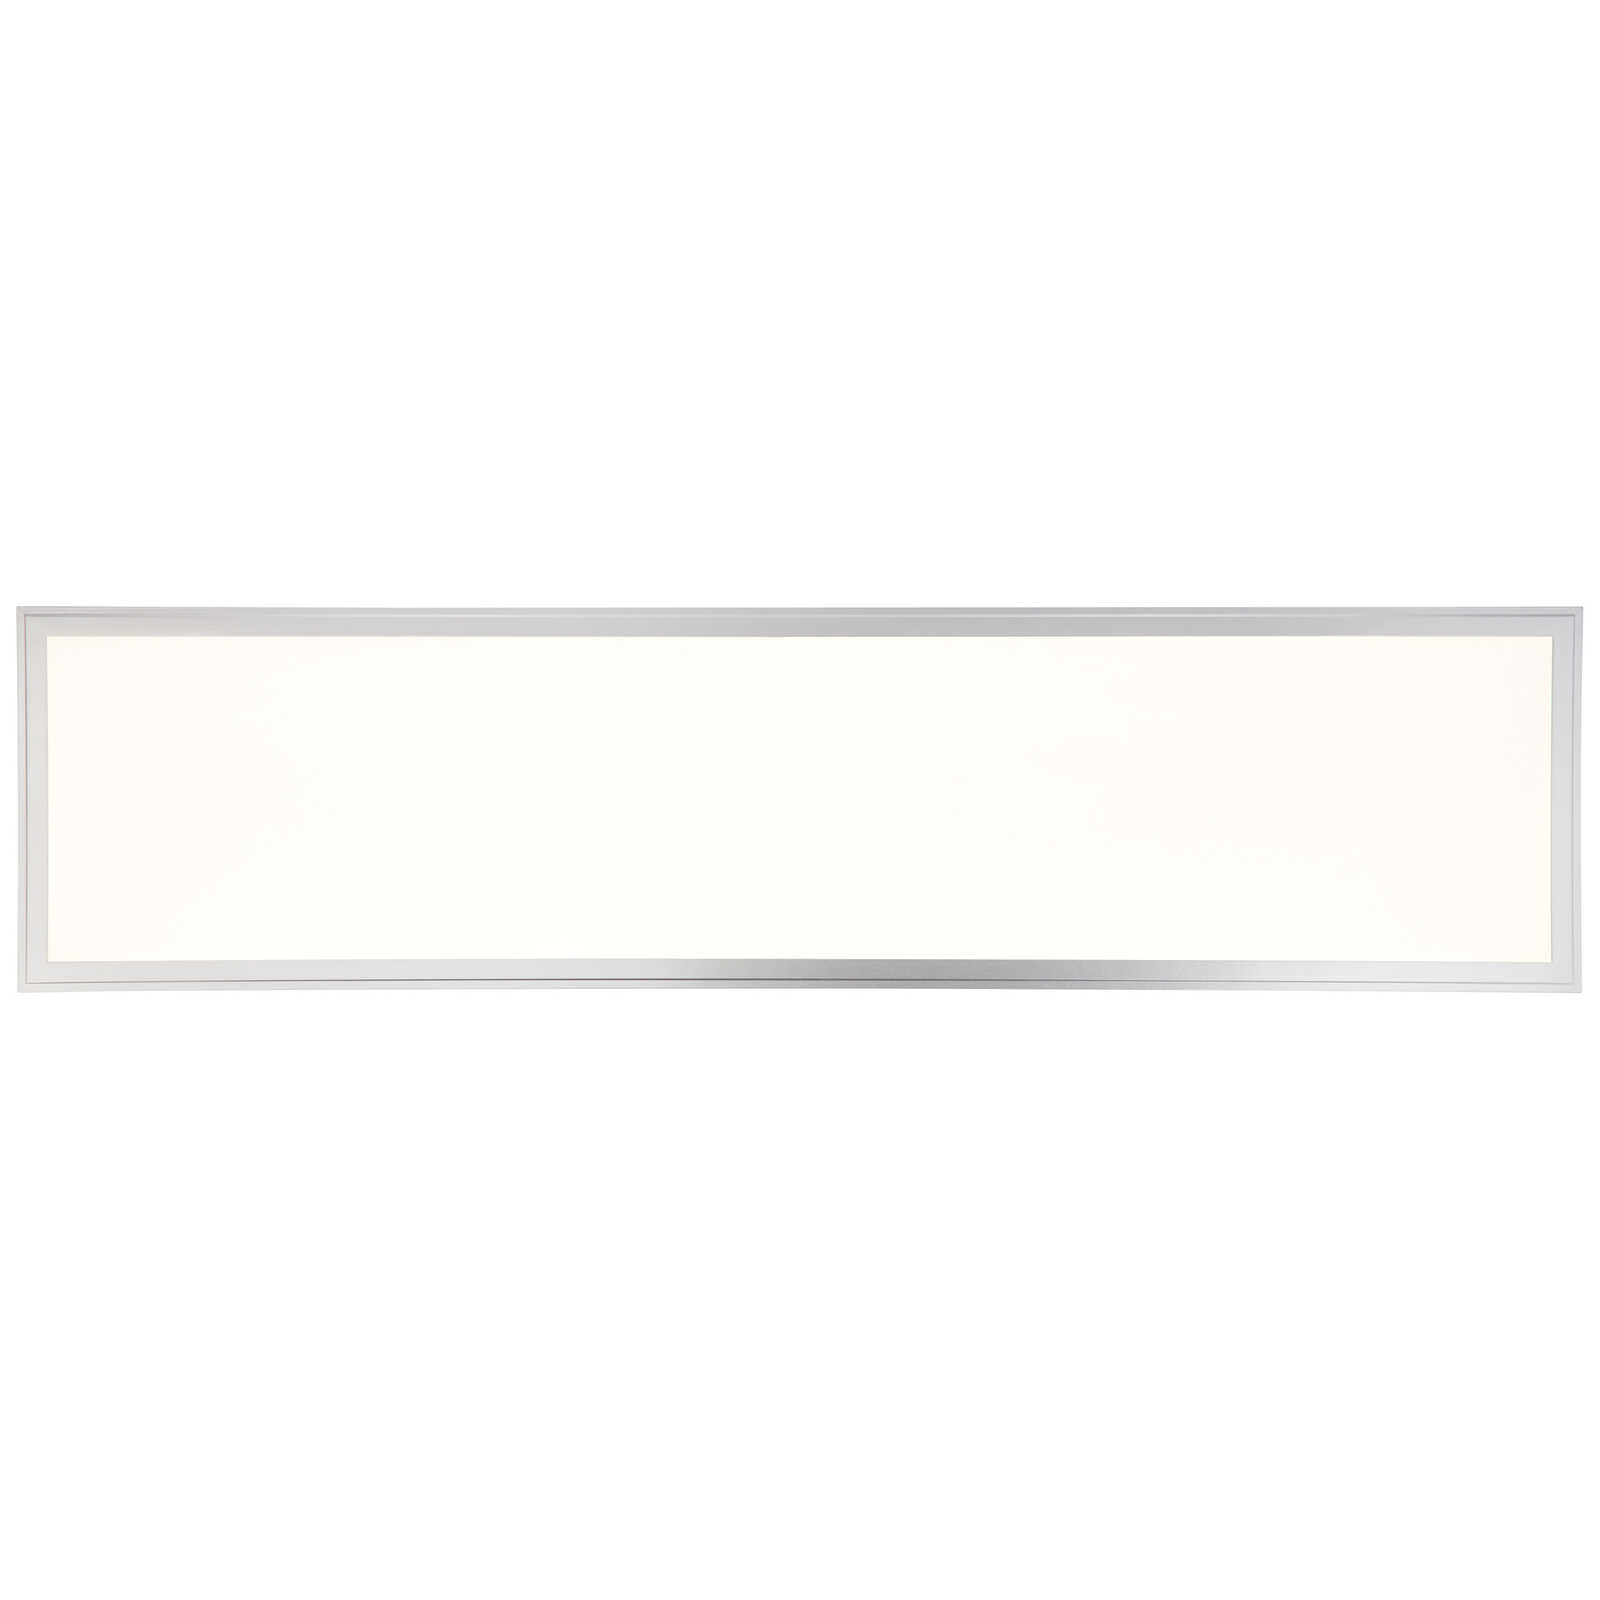             Plafoniera in metallo - Alba 3 - argento, bianco
        